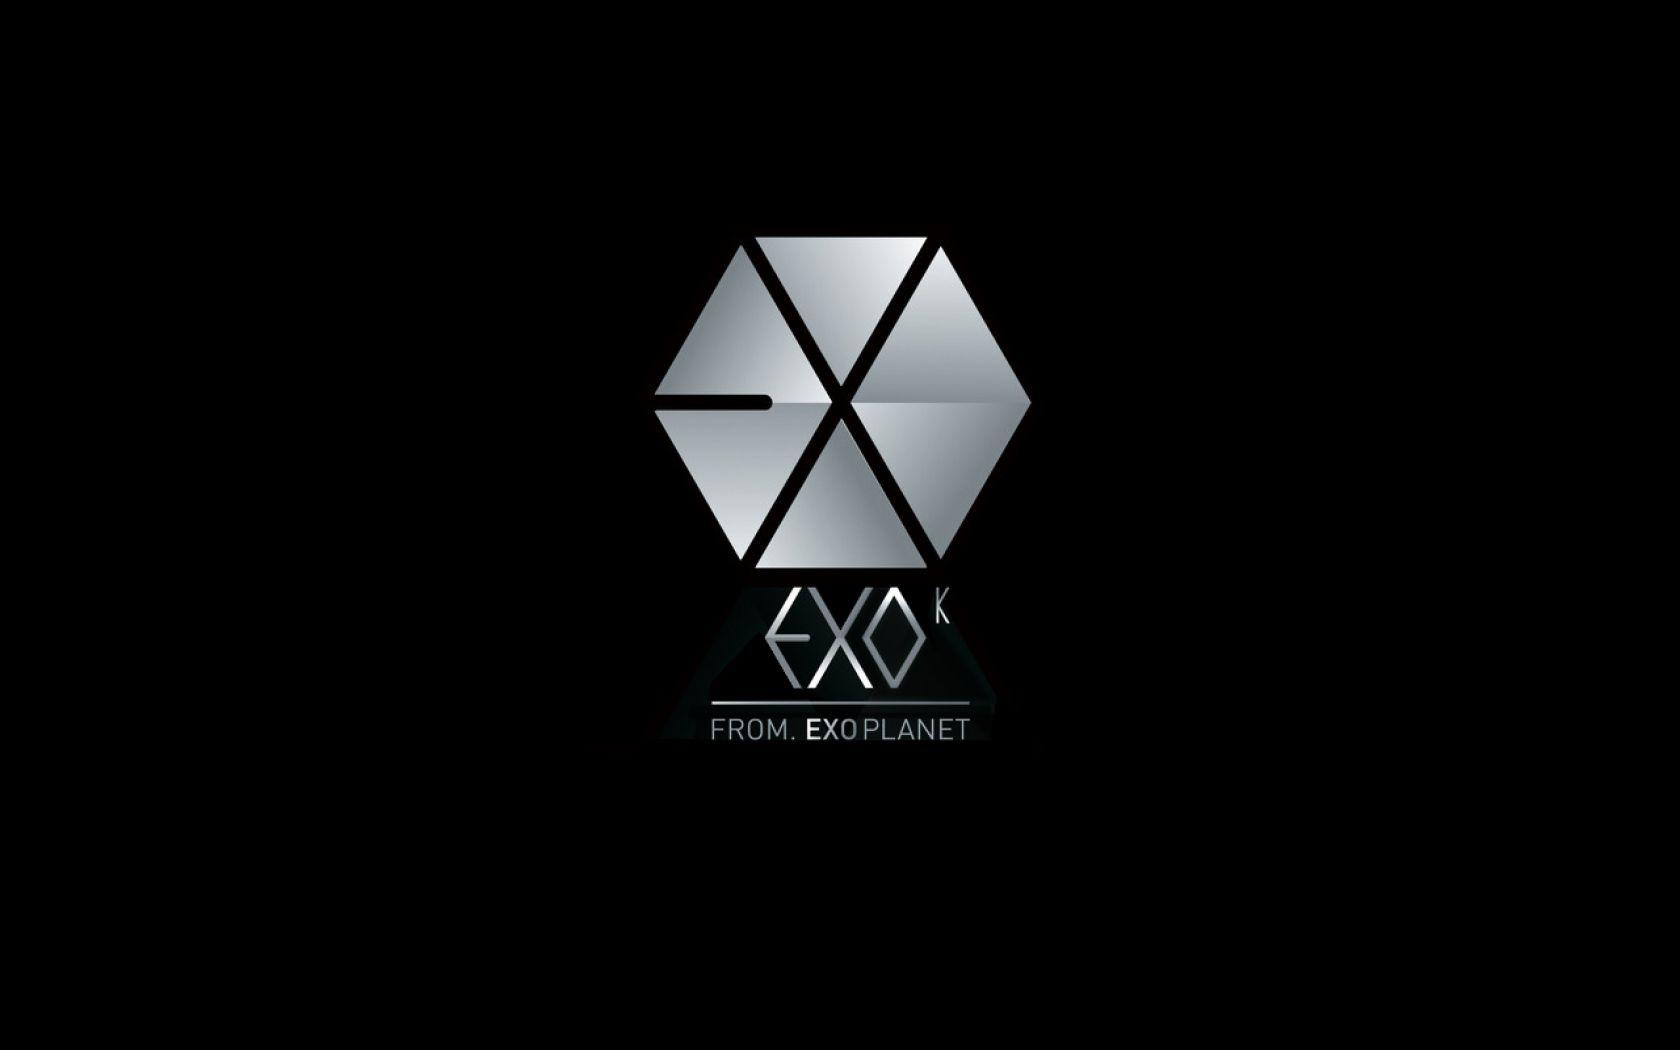 EXO-K Logo - EXO - EXO-K Wallpaper (32537980) - Fanpop